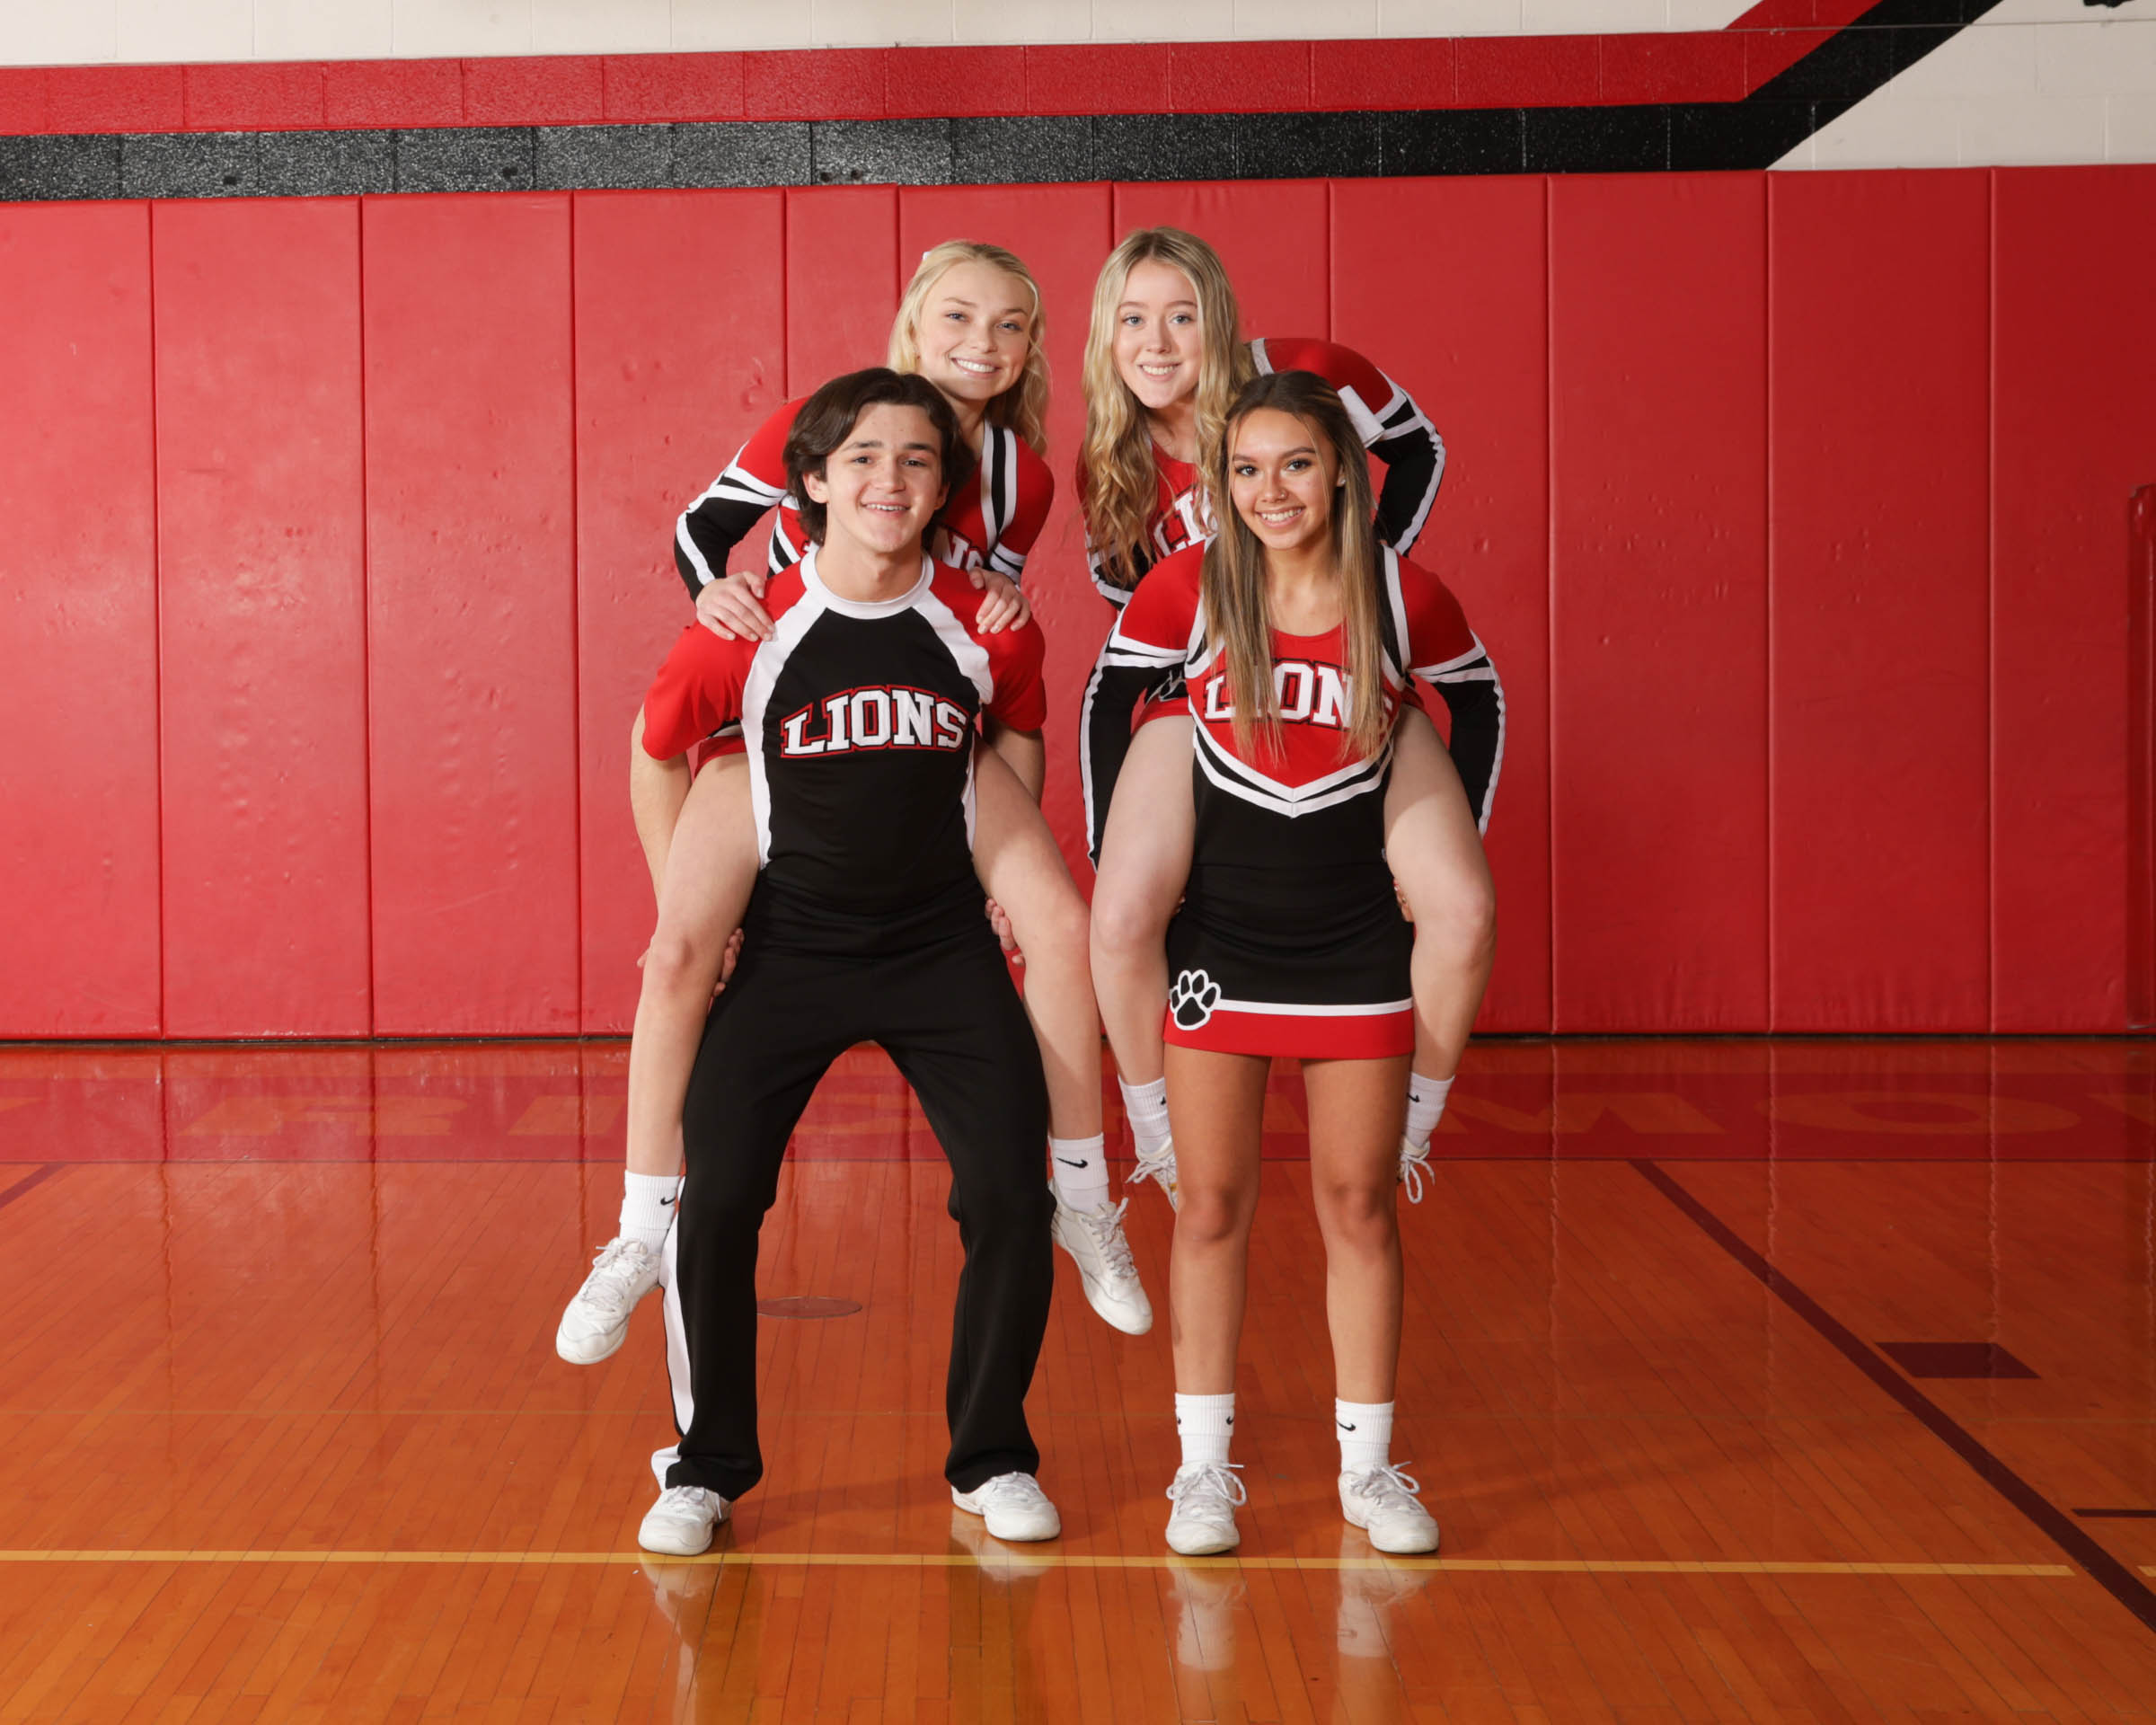 Four cheerleraders posing